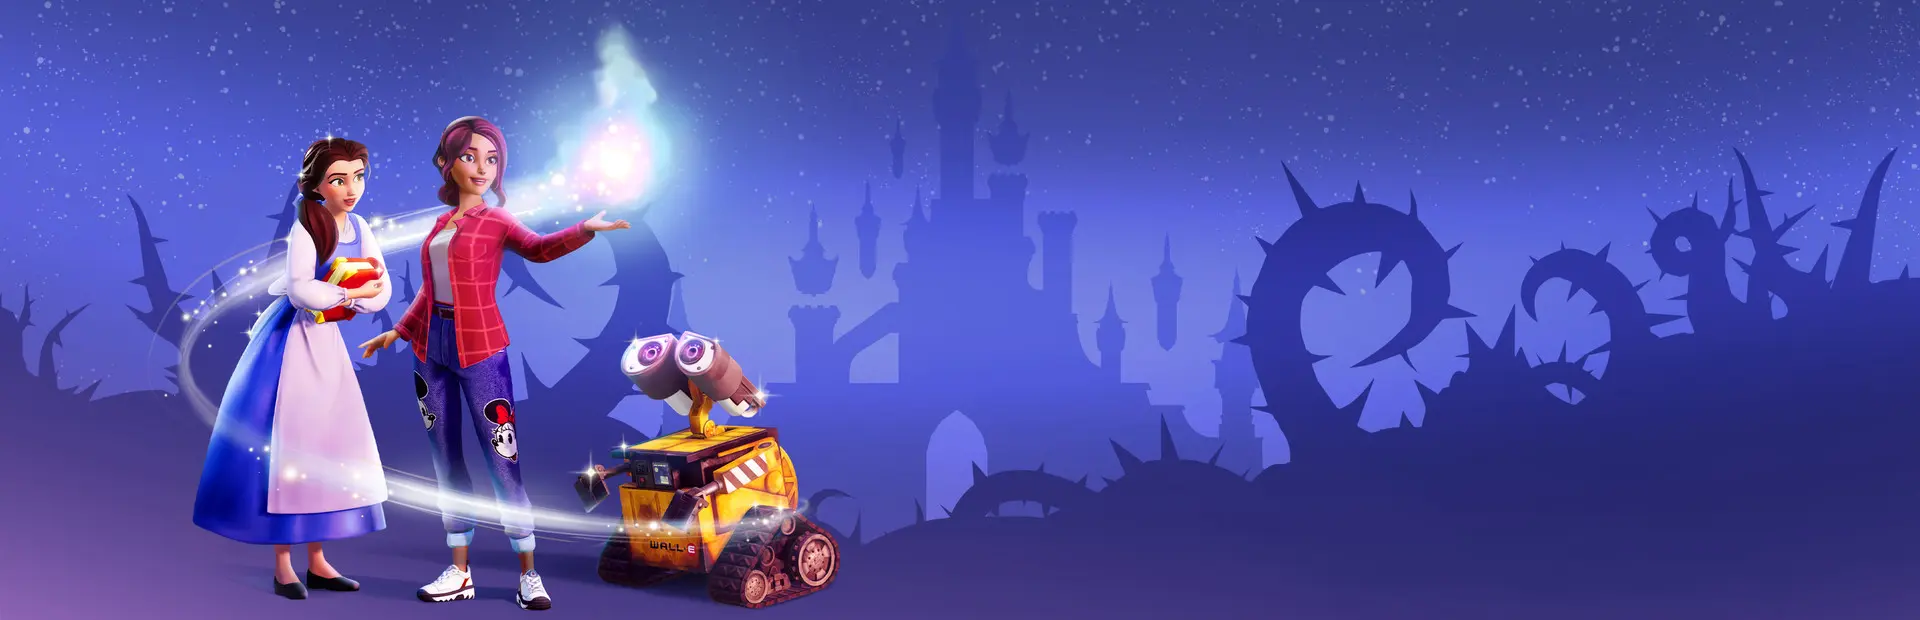 Disney Dreamlight Valley Gold Edition v1.9.0.9407 Free Download